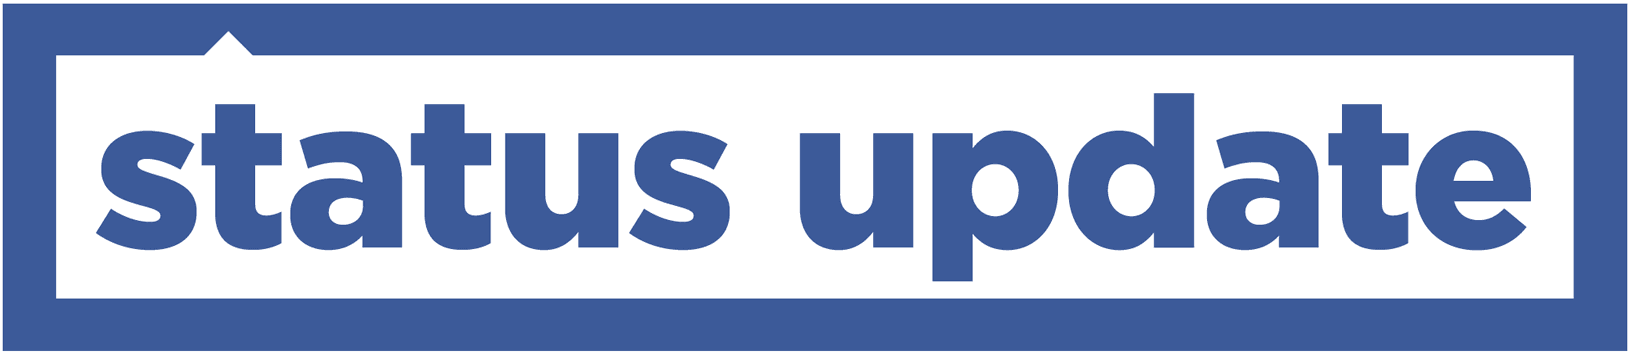 Status Update logo